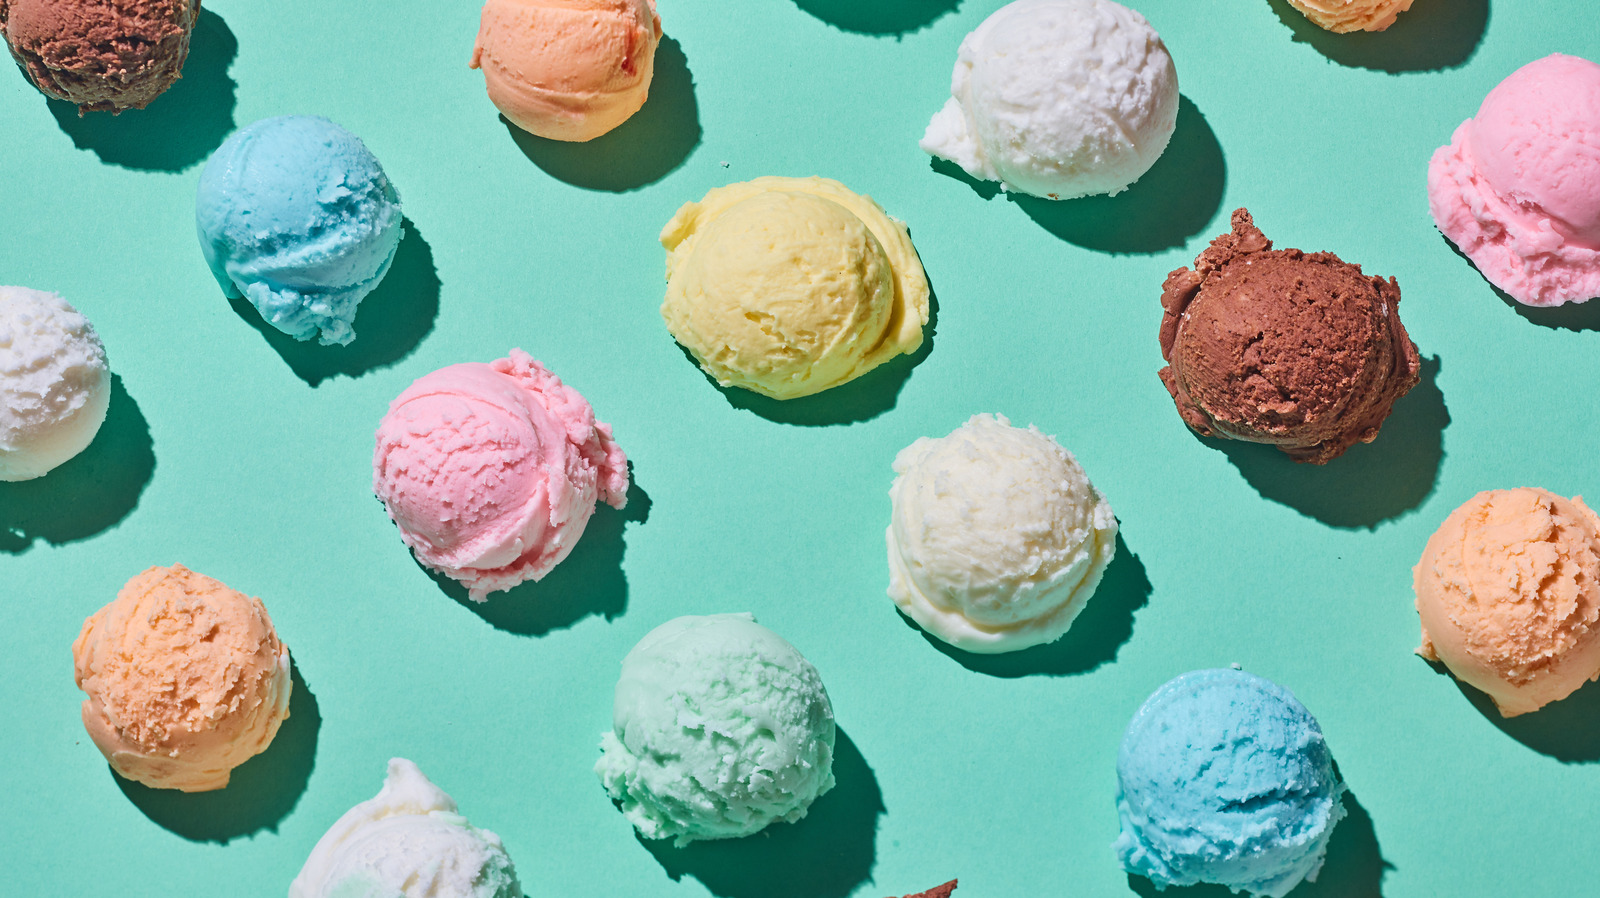 Ninja creami: Why has the ice cream maker gone viral?